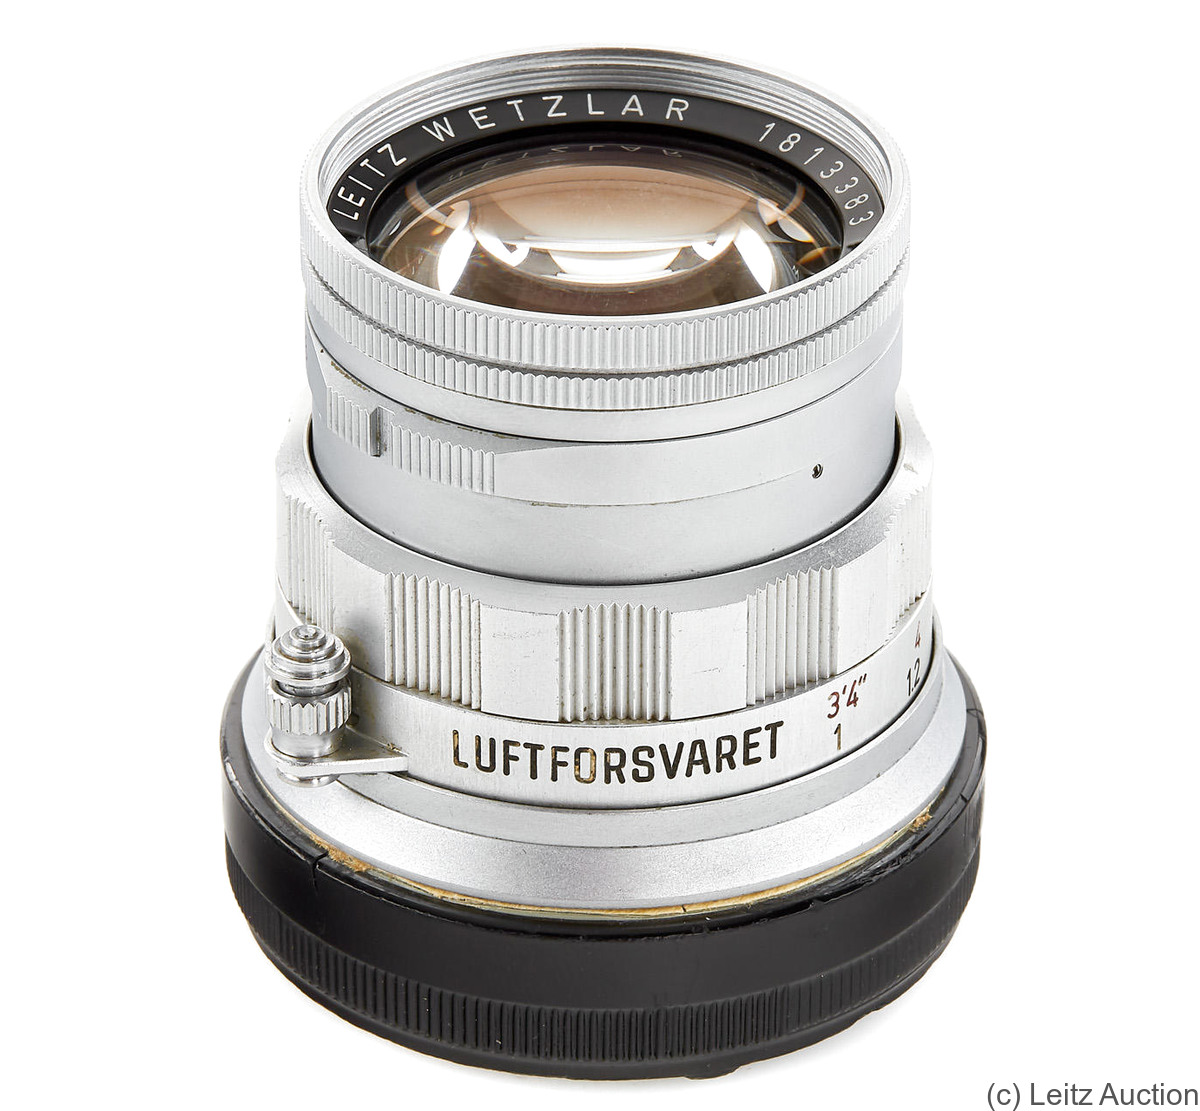 Leitz: 50mm (5cm) f2 Summicron (BM, chrome) LUFTFORSVARET camera